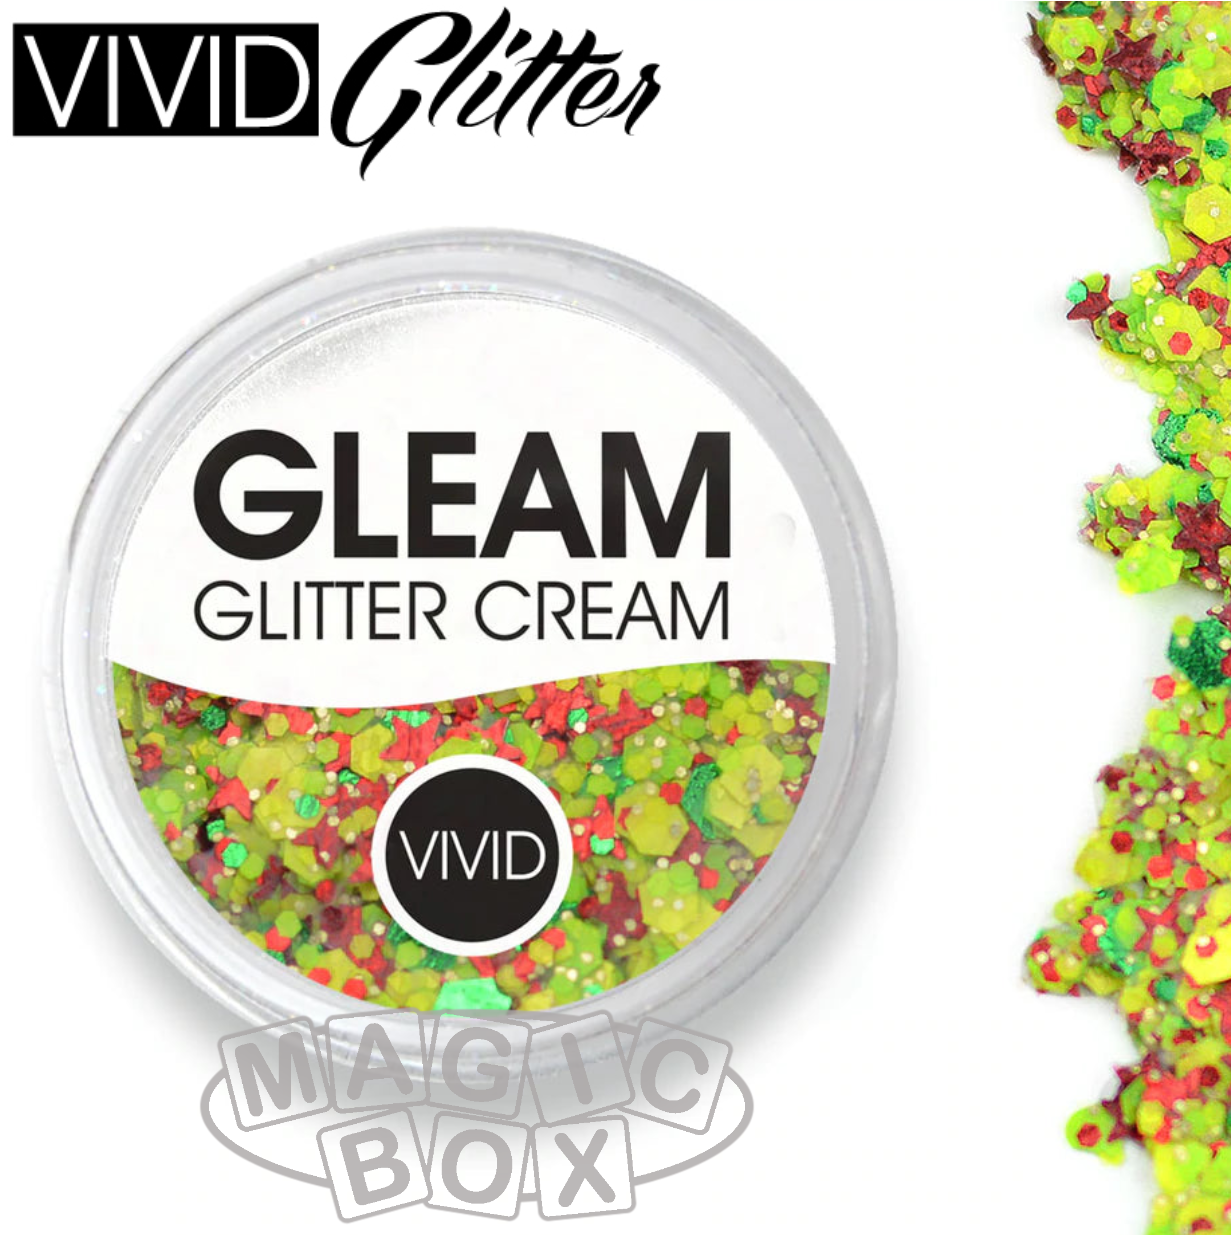 Vivid, Gleam Glitter Cream 10g, Carnaval